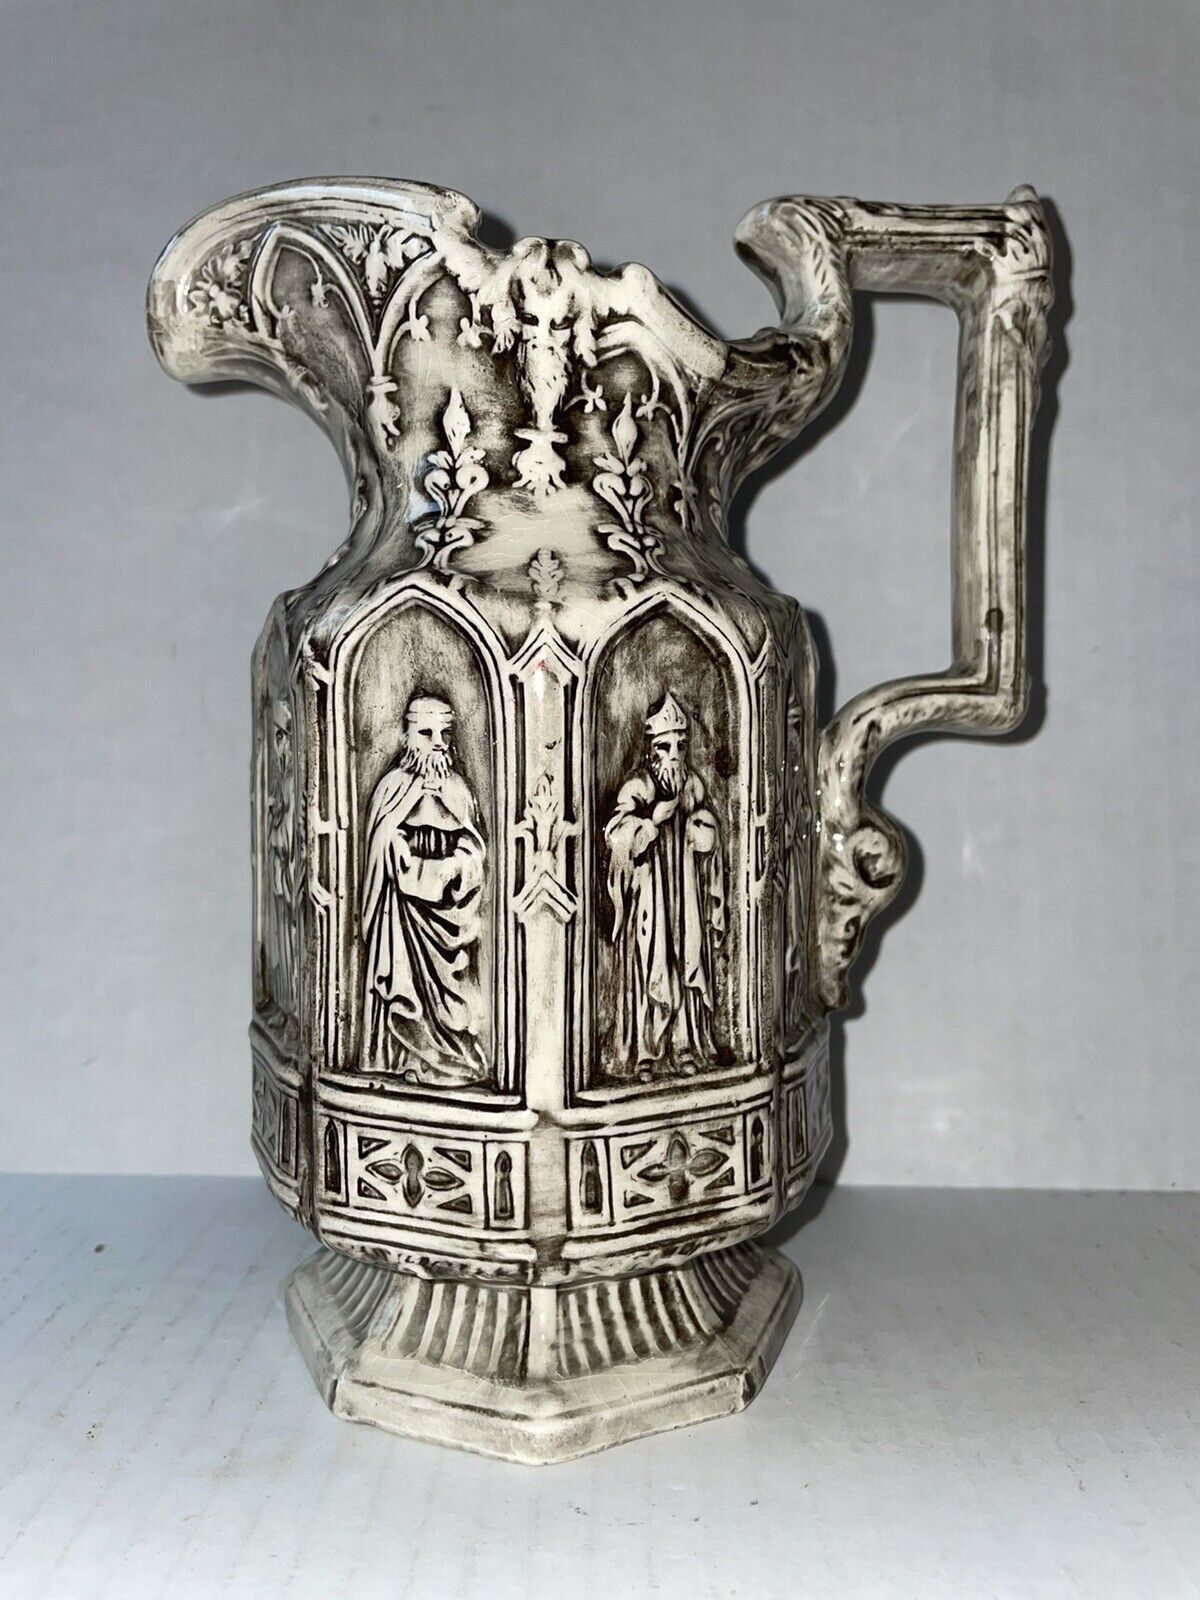 Vintage Gothic Ceramic Pitcher Apostle Religious Figures Symbols